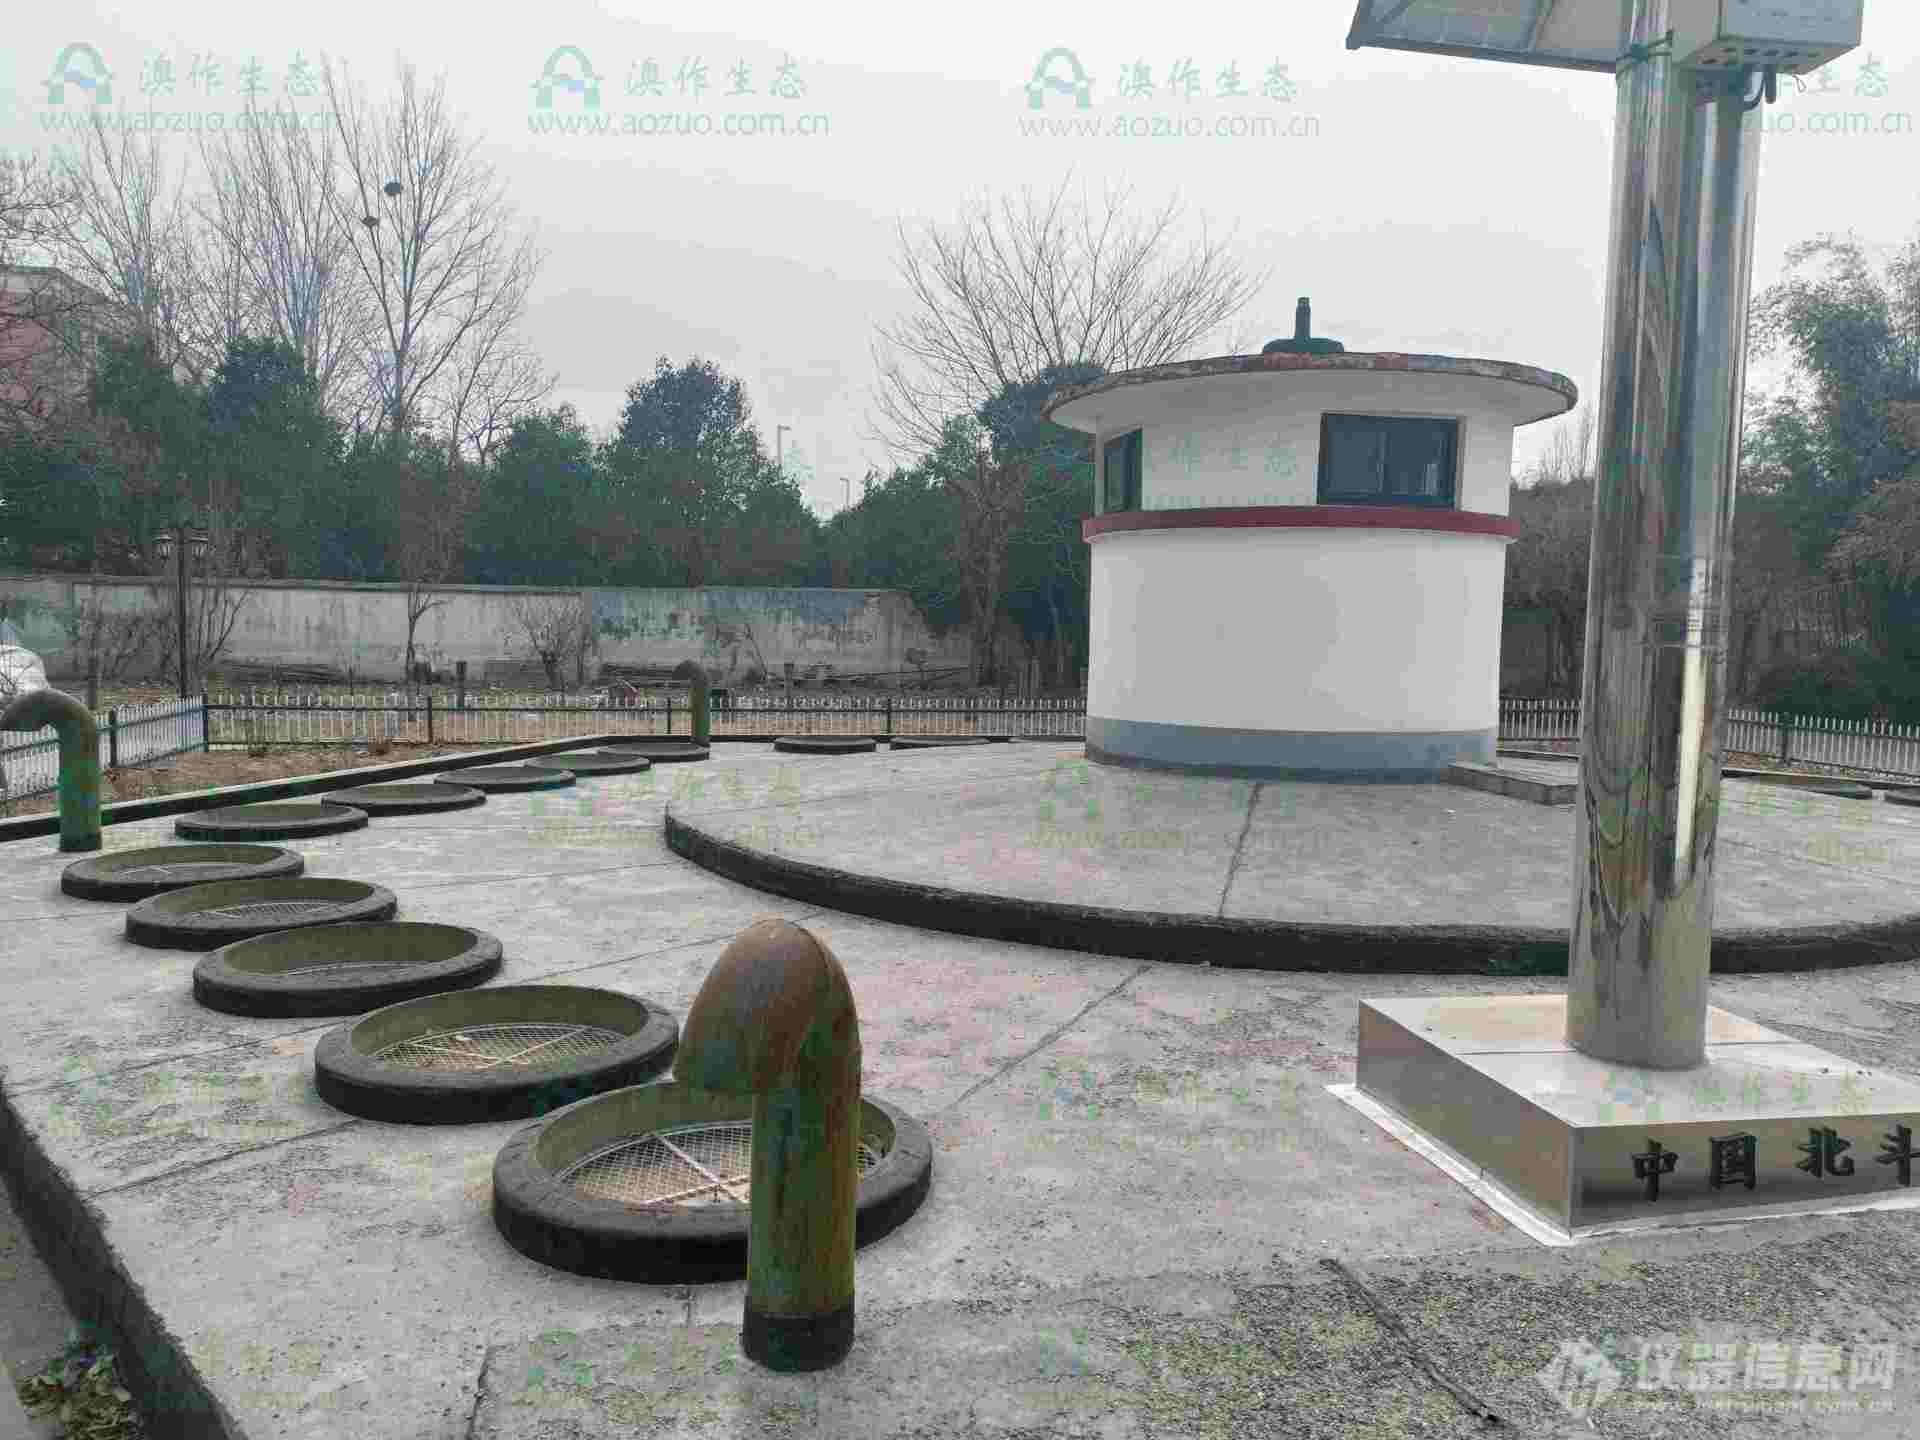 ENVILog-100土壤水分监测系统在河南省自然资源监测院安装完成